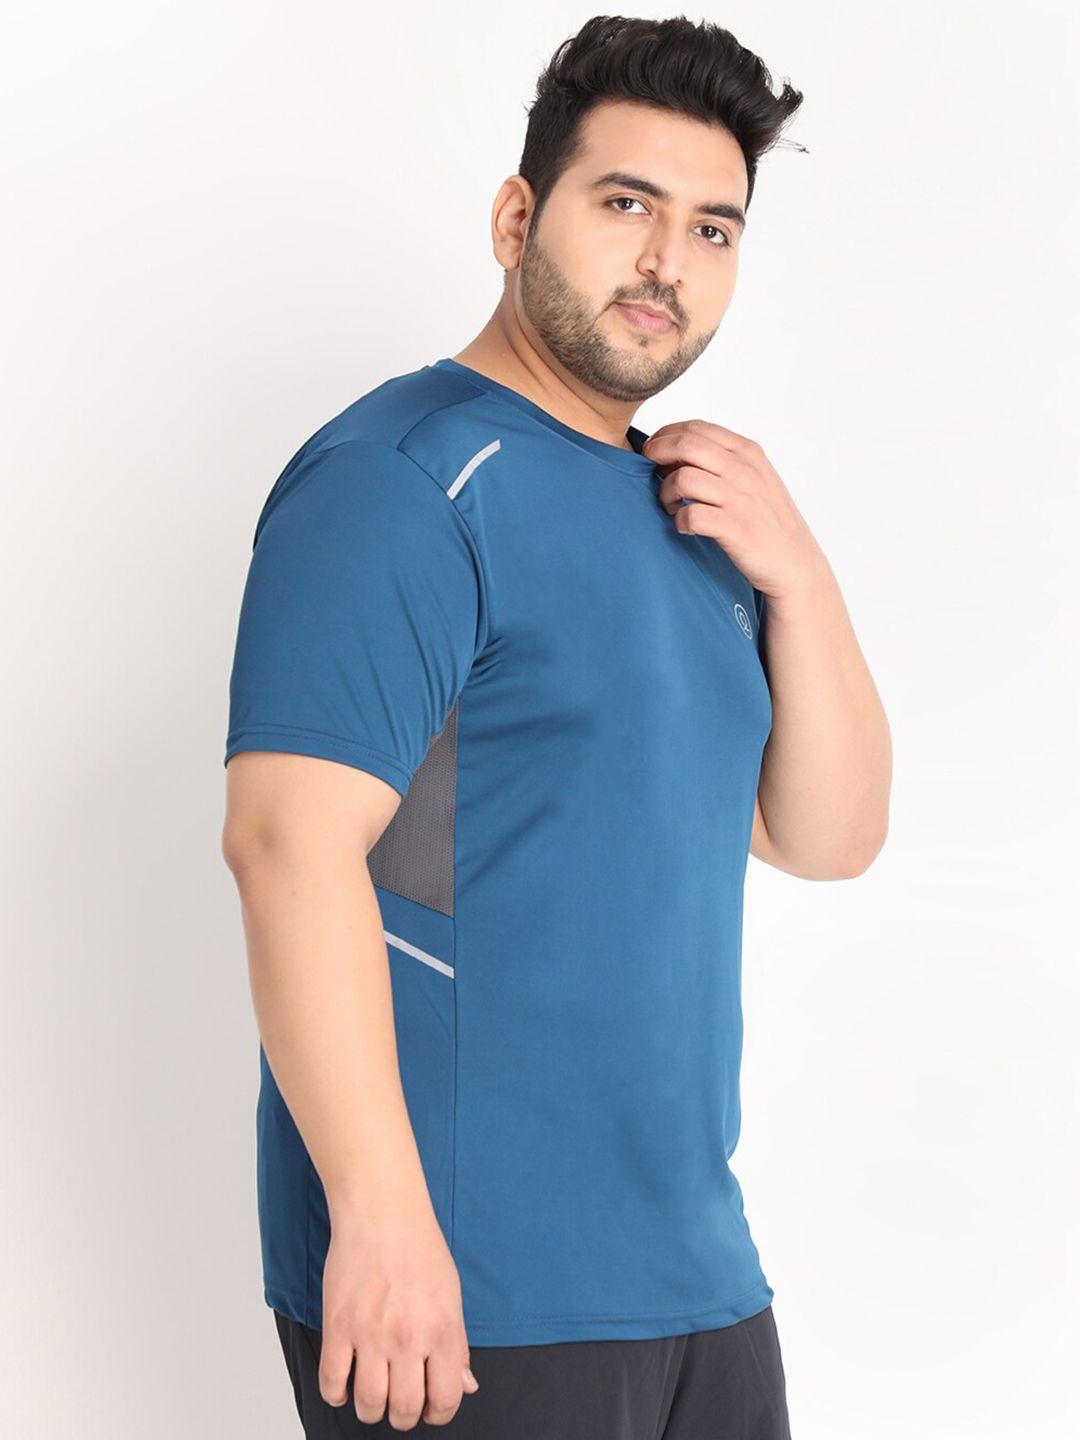 chkokko plus men blue solid dri-fit training or gym t-shirt